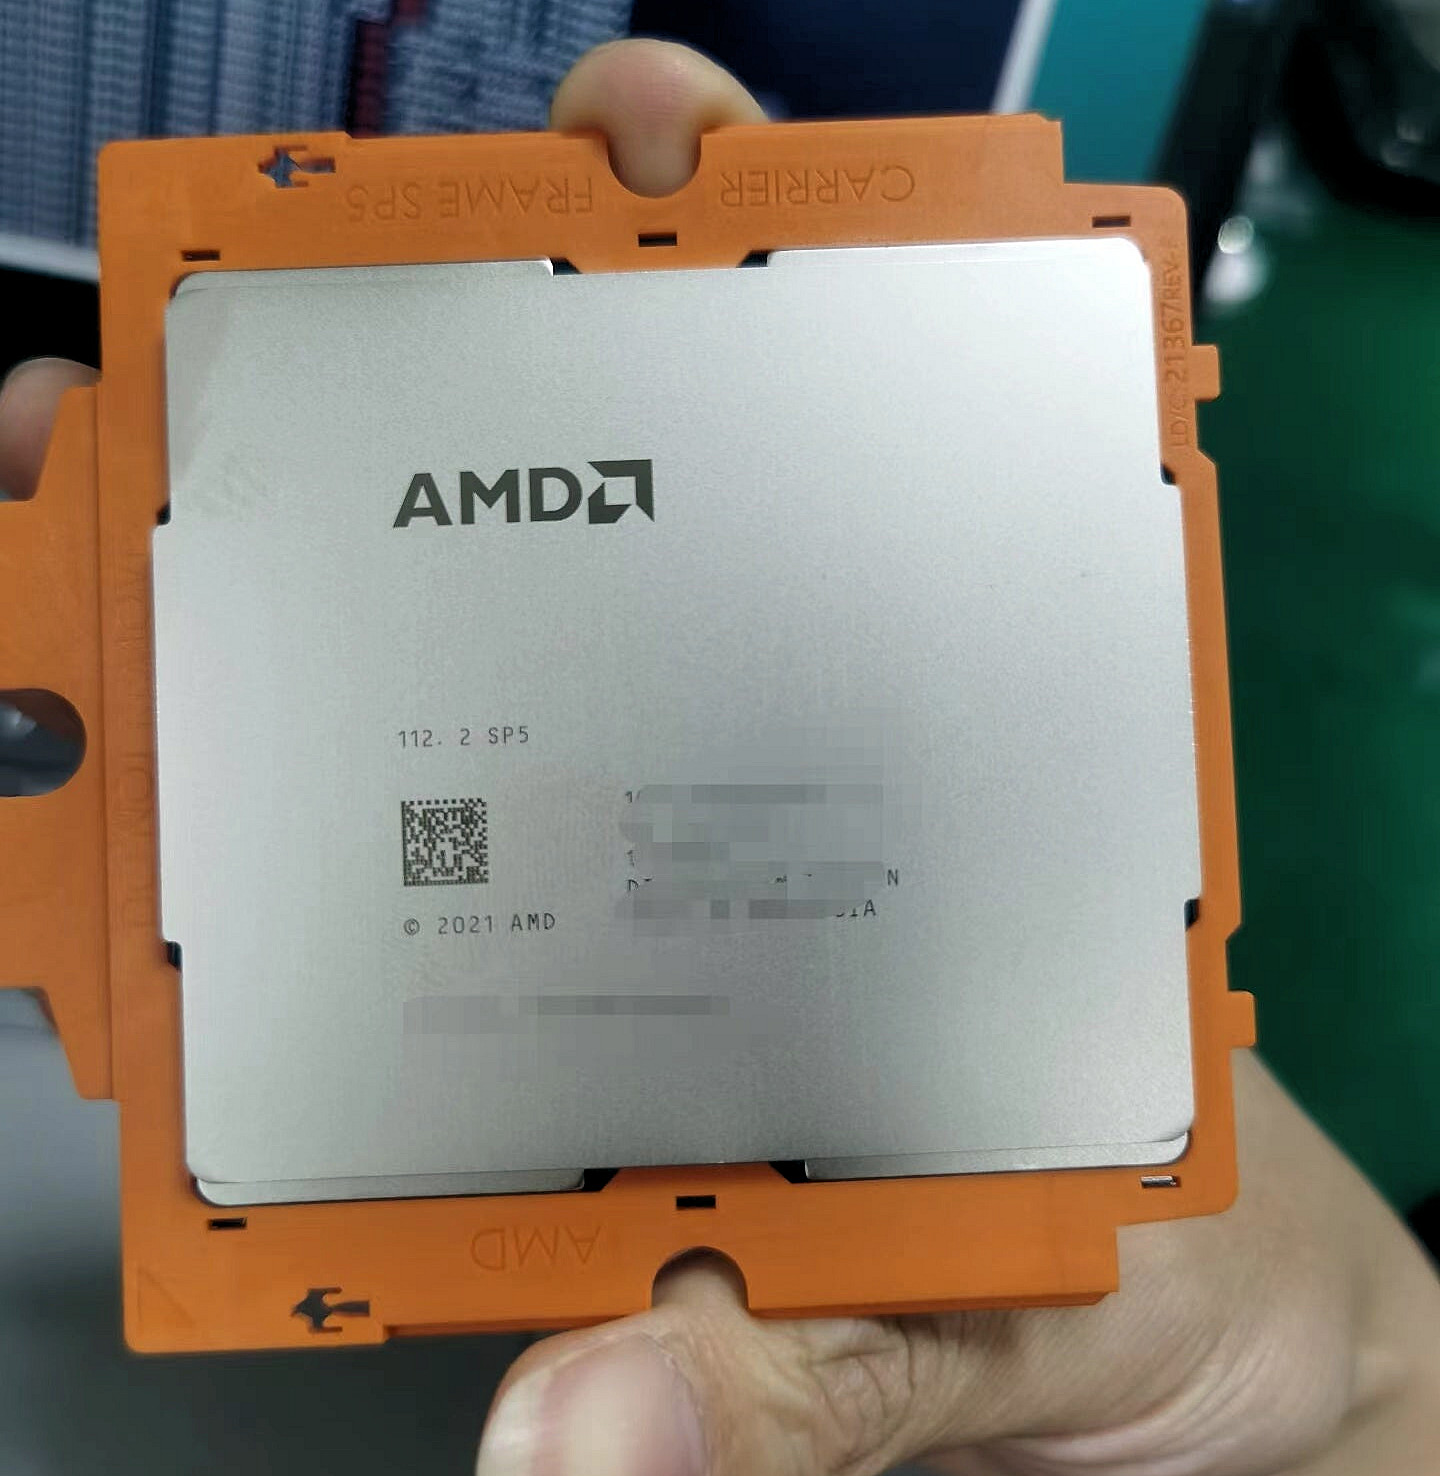 AMD-SP5-Genoa.jpg